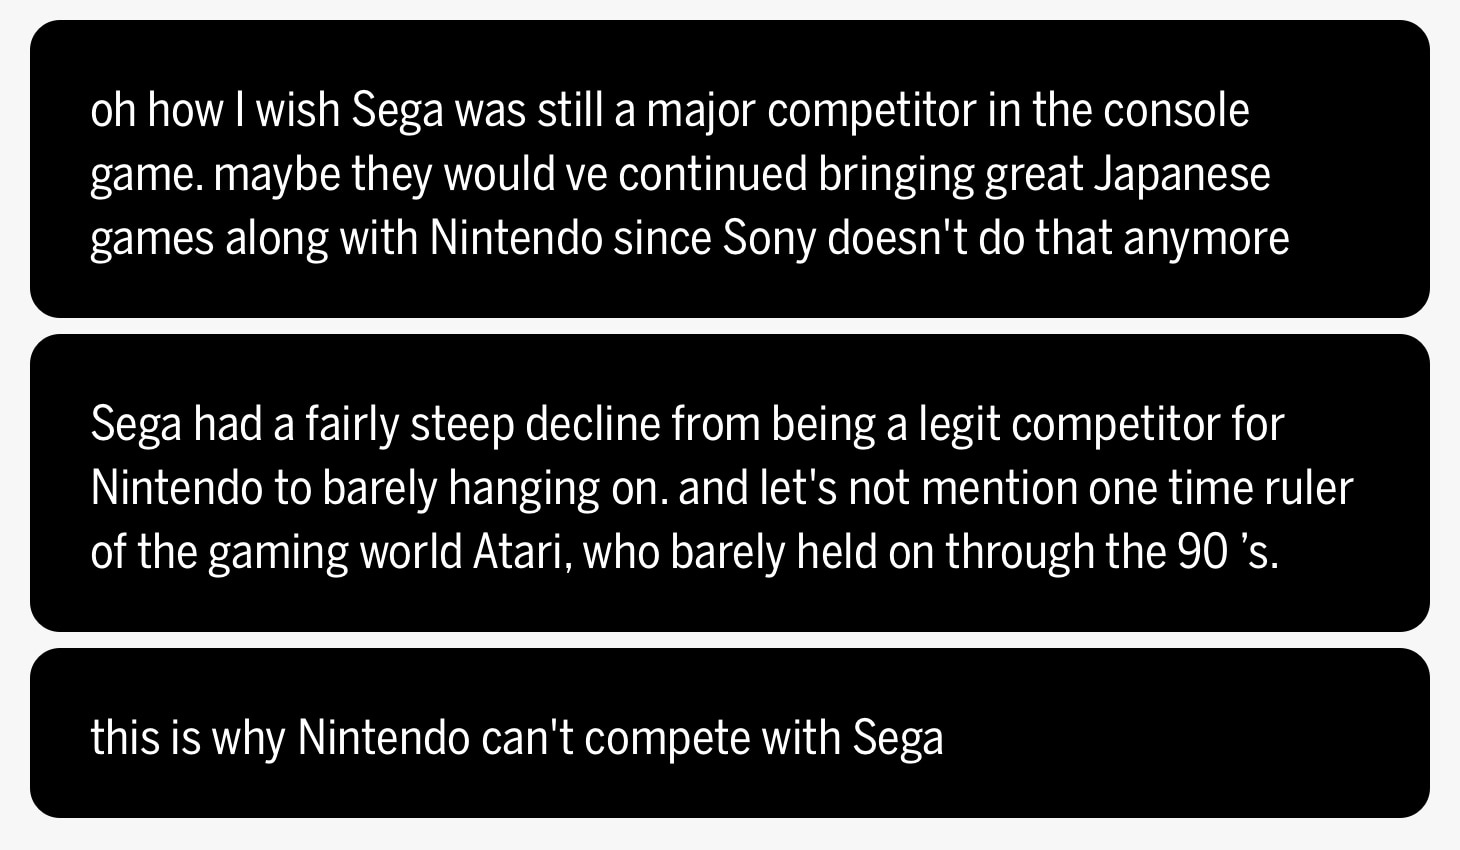 Tweets about Nintendo vs Sega